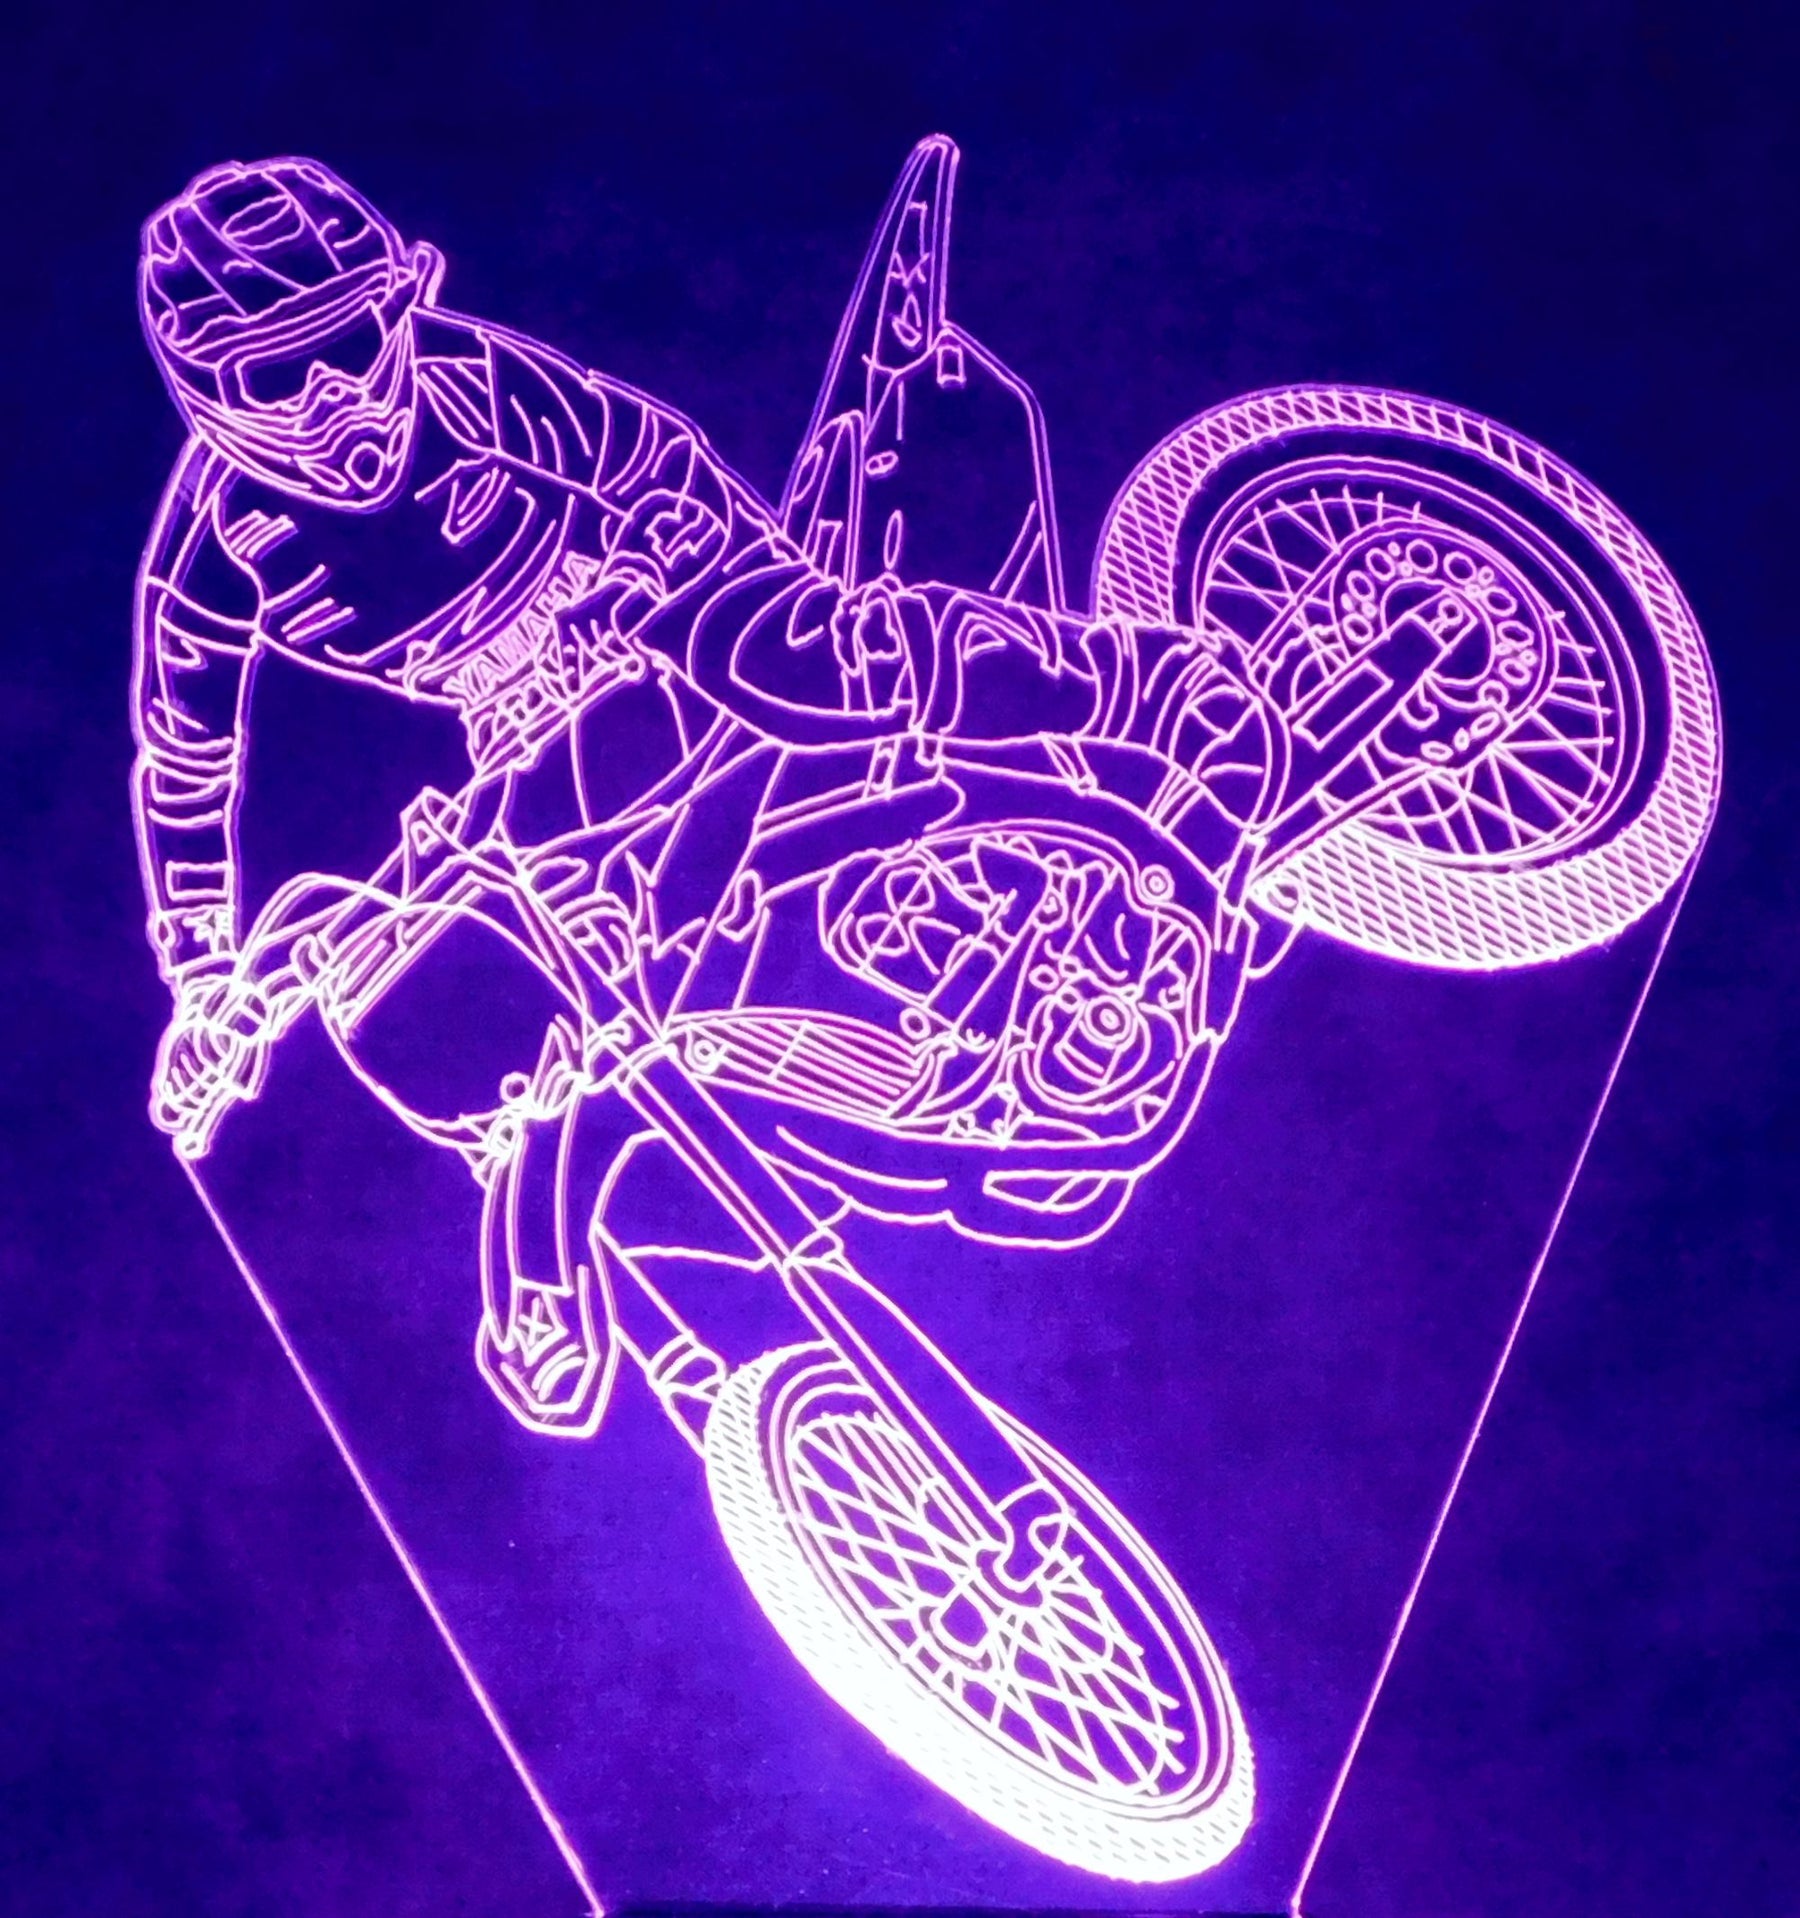 MotoCross Rider 3-D Optical Illusion Multicolored LED Lamp